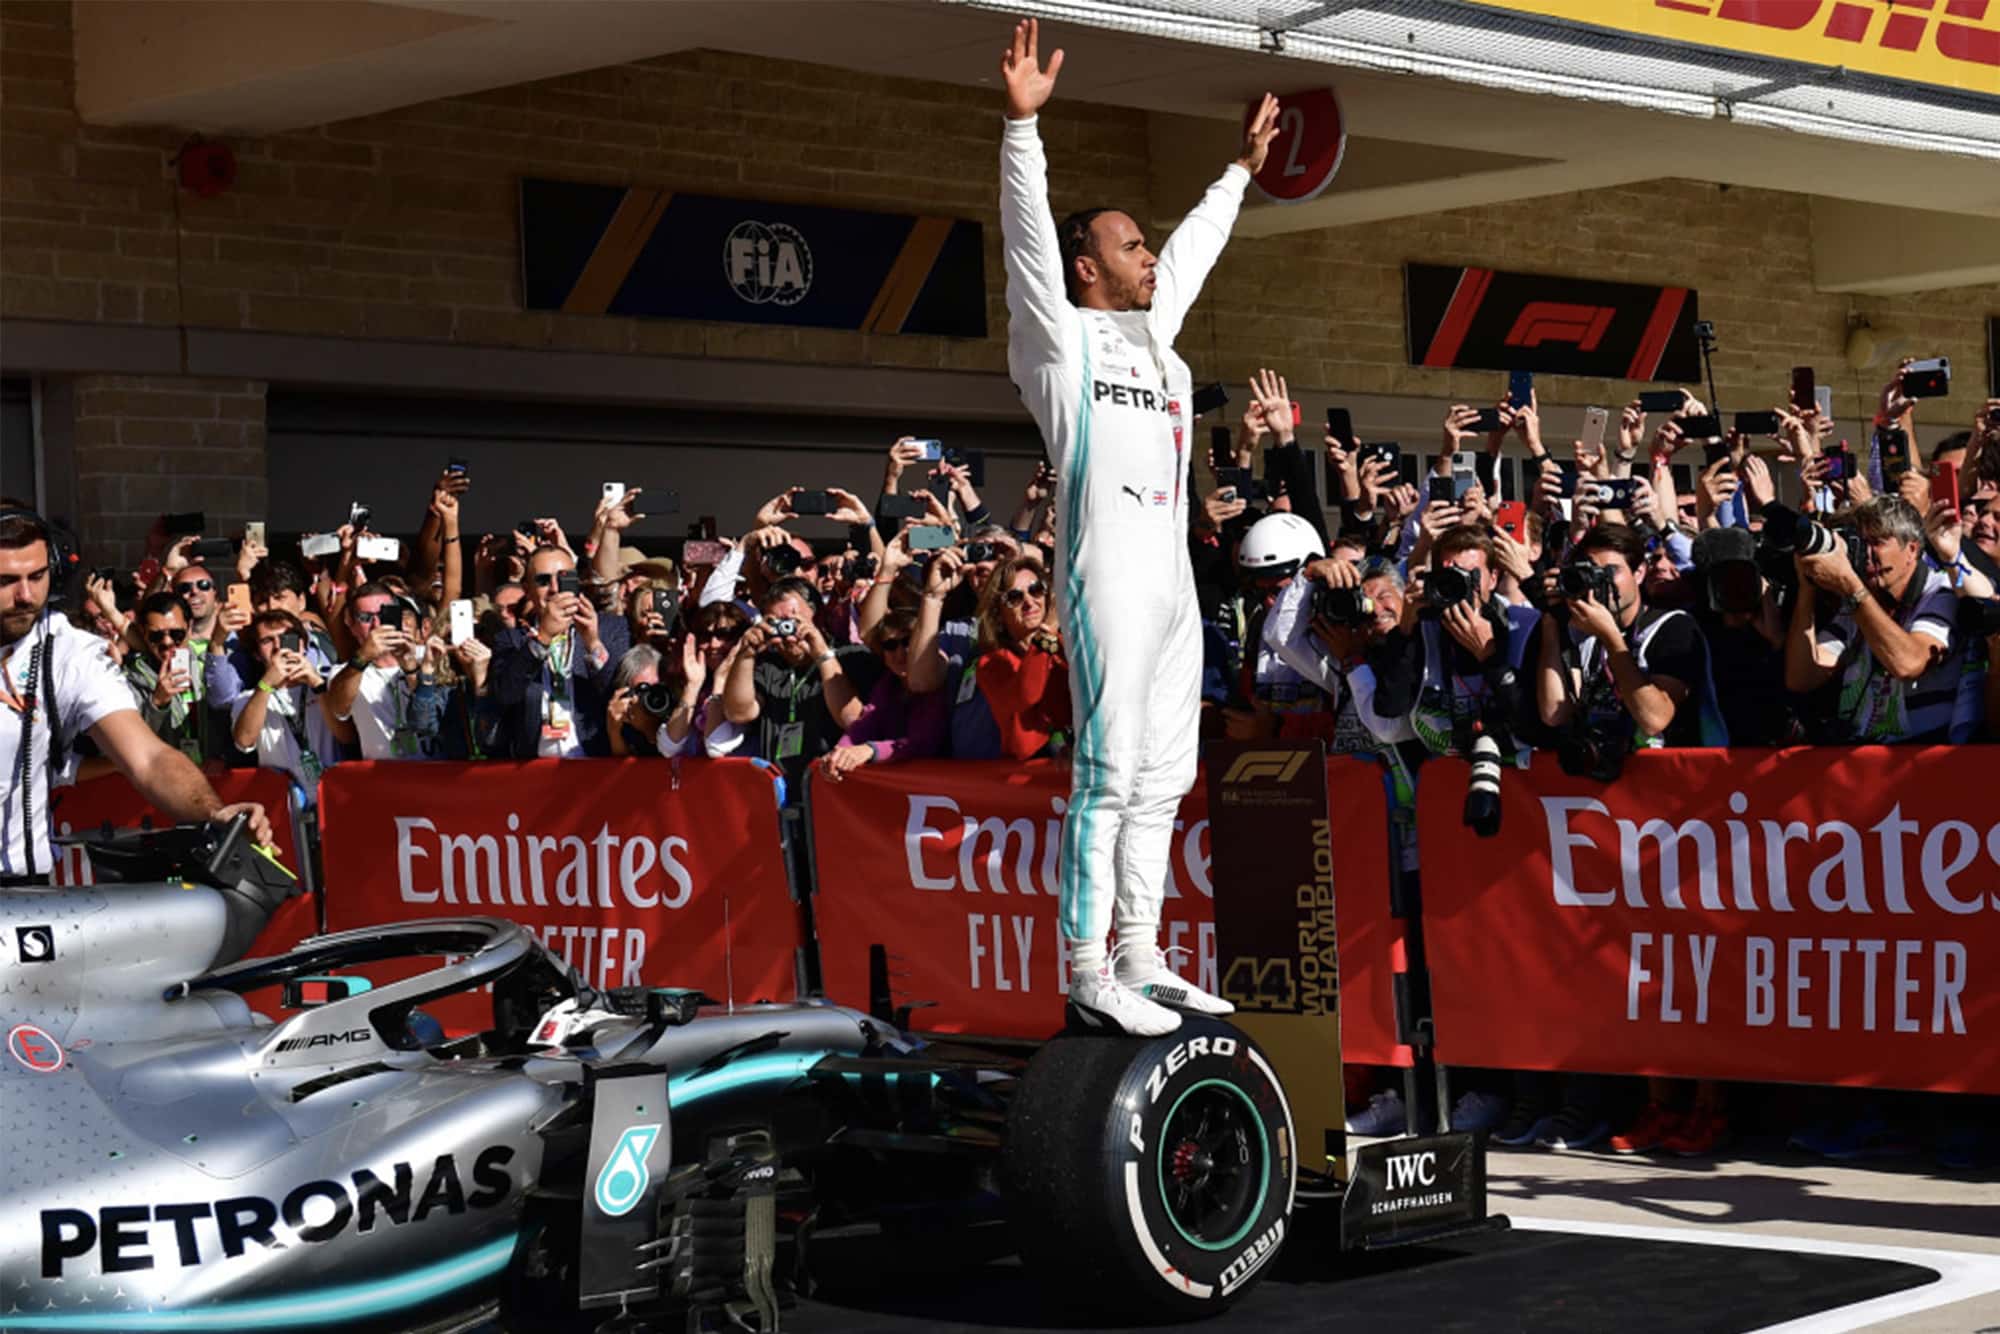 Lewis Hamilton celebrates winning his sixth world title at the 2019 United States Grand Prix